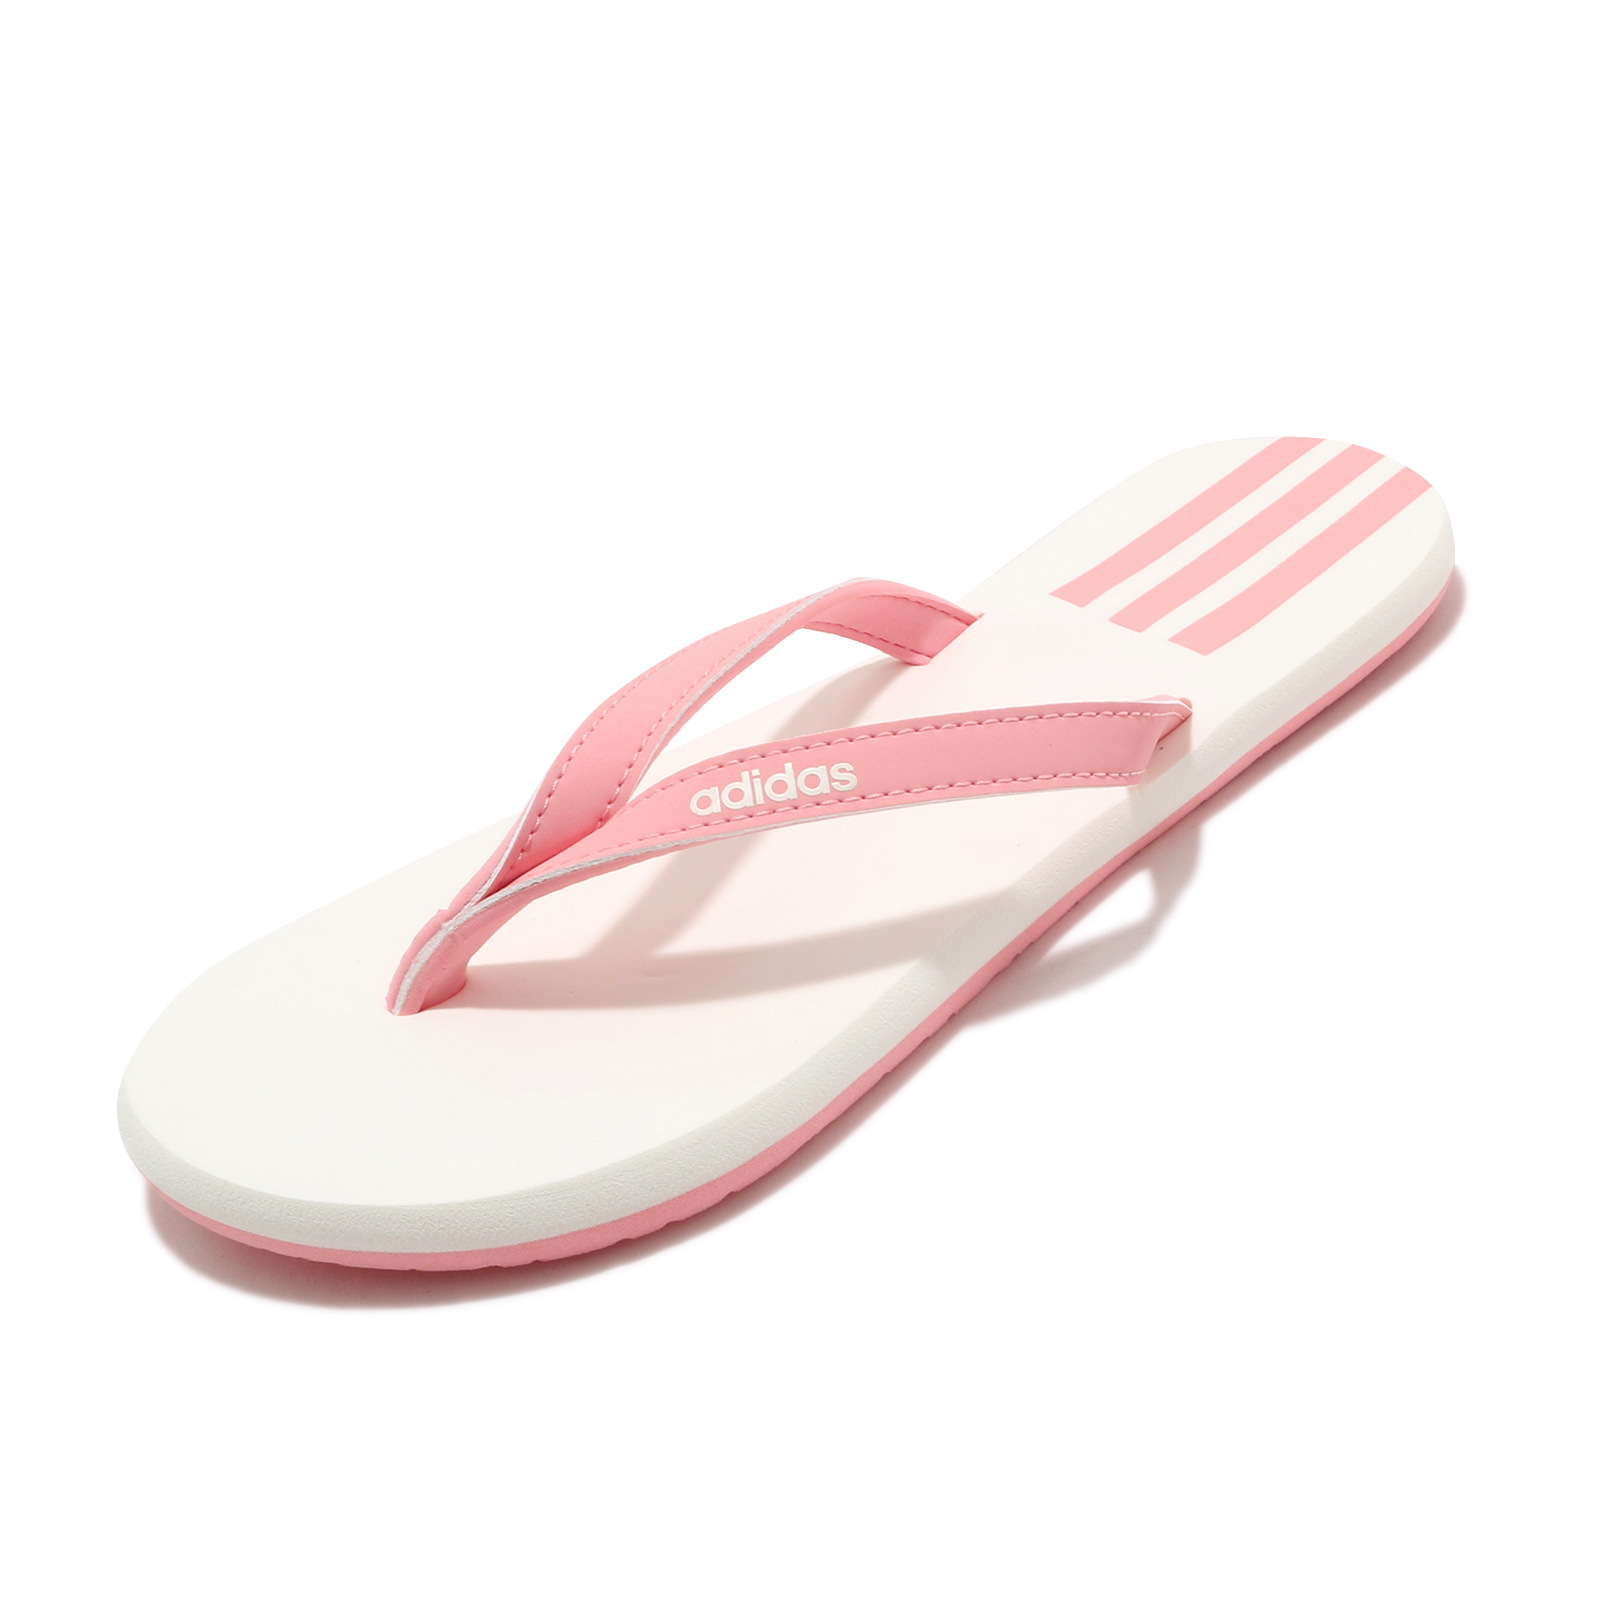 pink brand flip flops